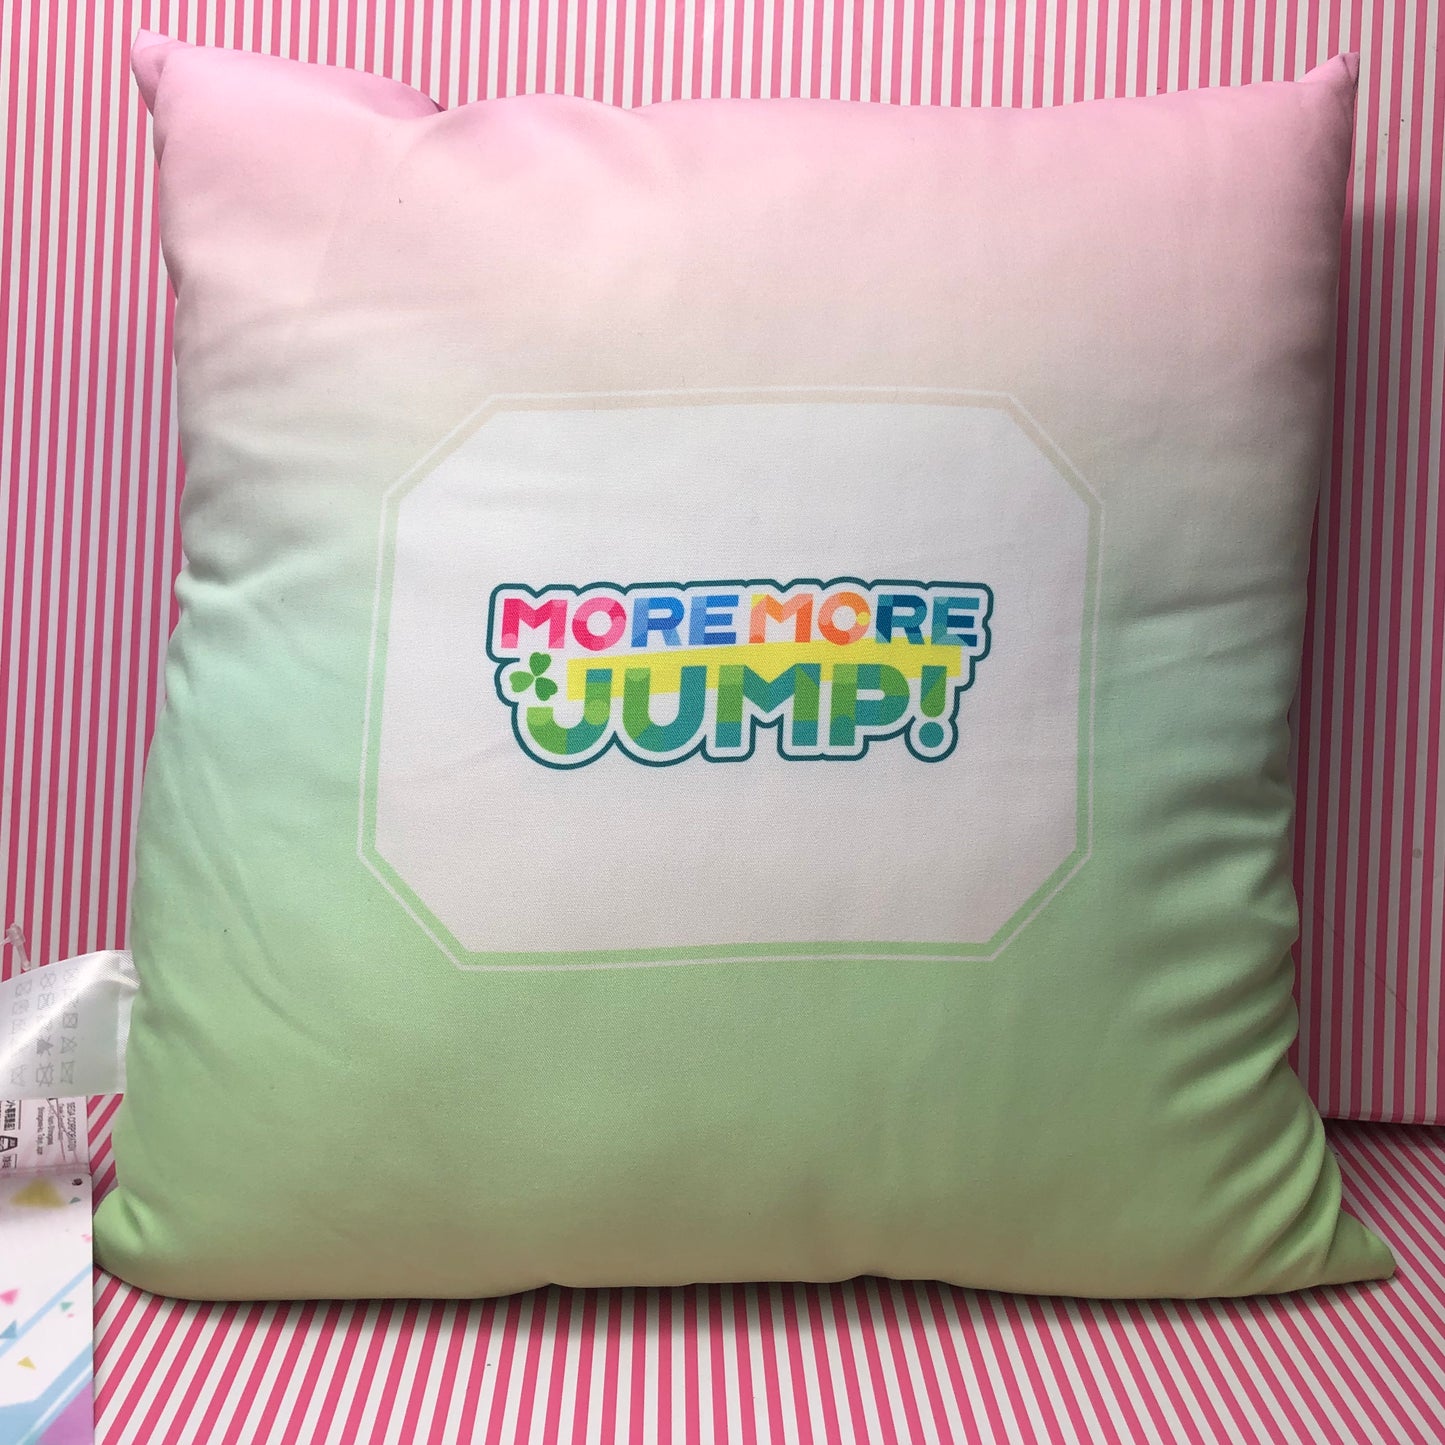 Project Sekai Colorful Stage Cushion! ft. Hatsune Miku - More More Jump! Newly Idol